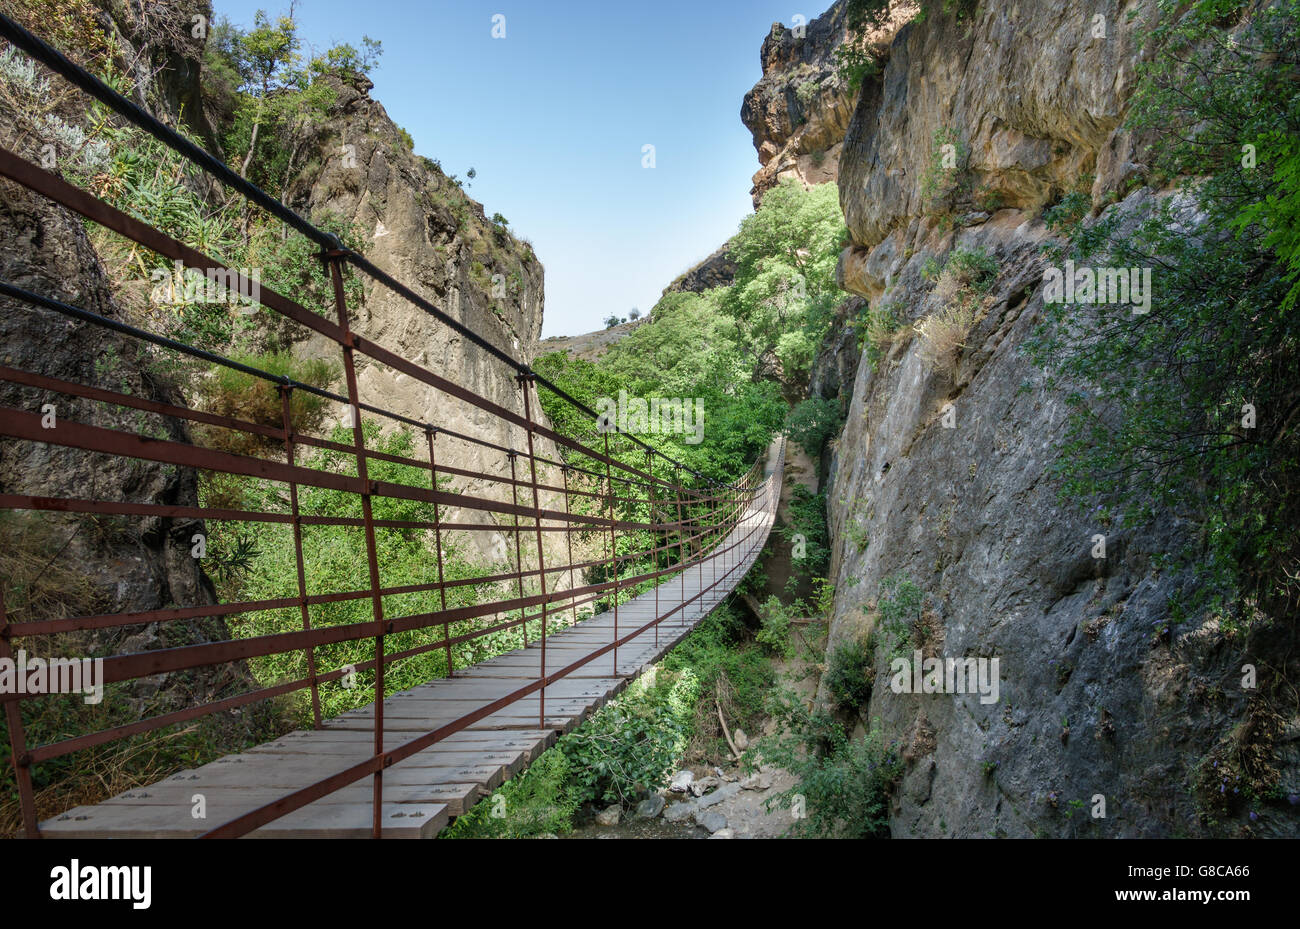 Ponte di corde in un canyon in Cahorros, Granada, Foto Stock